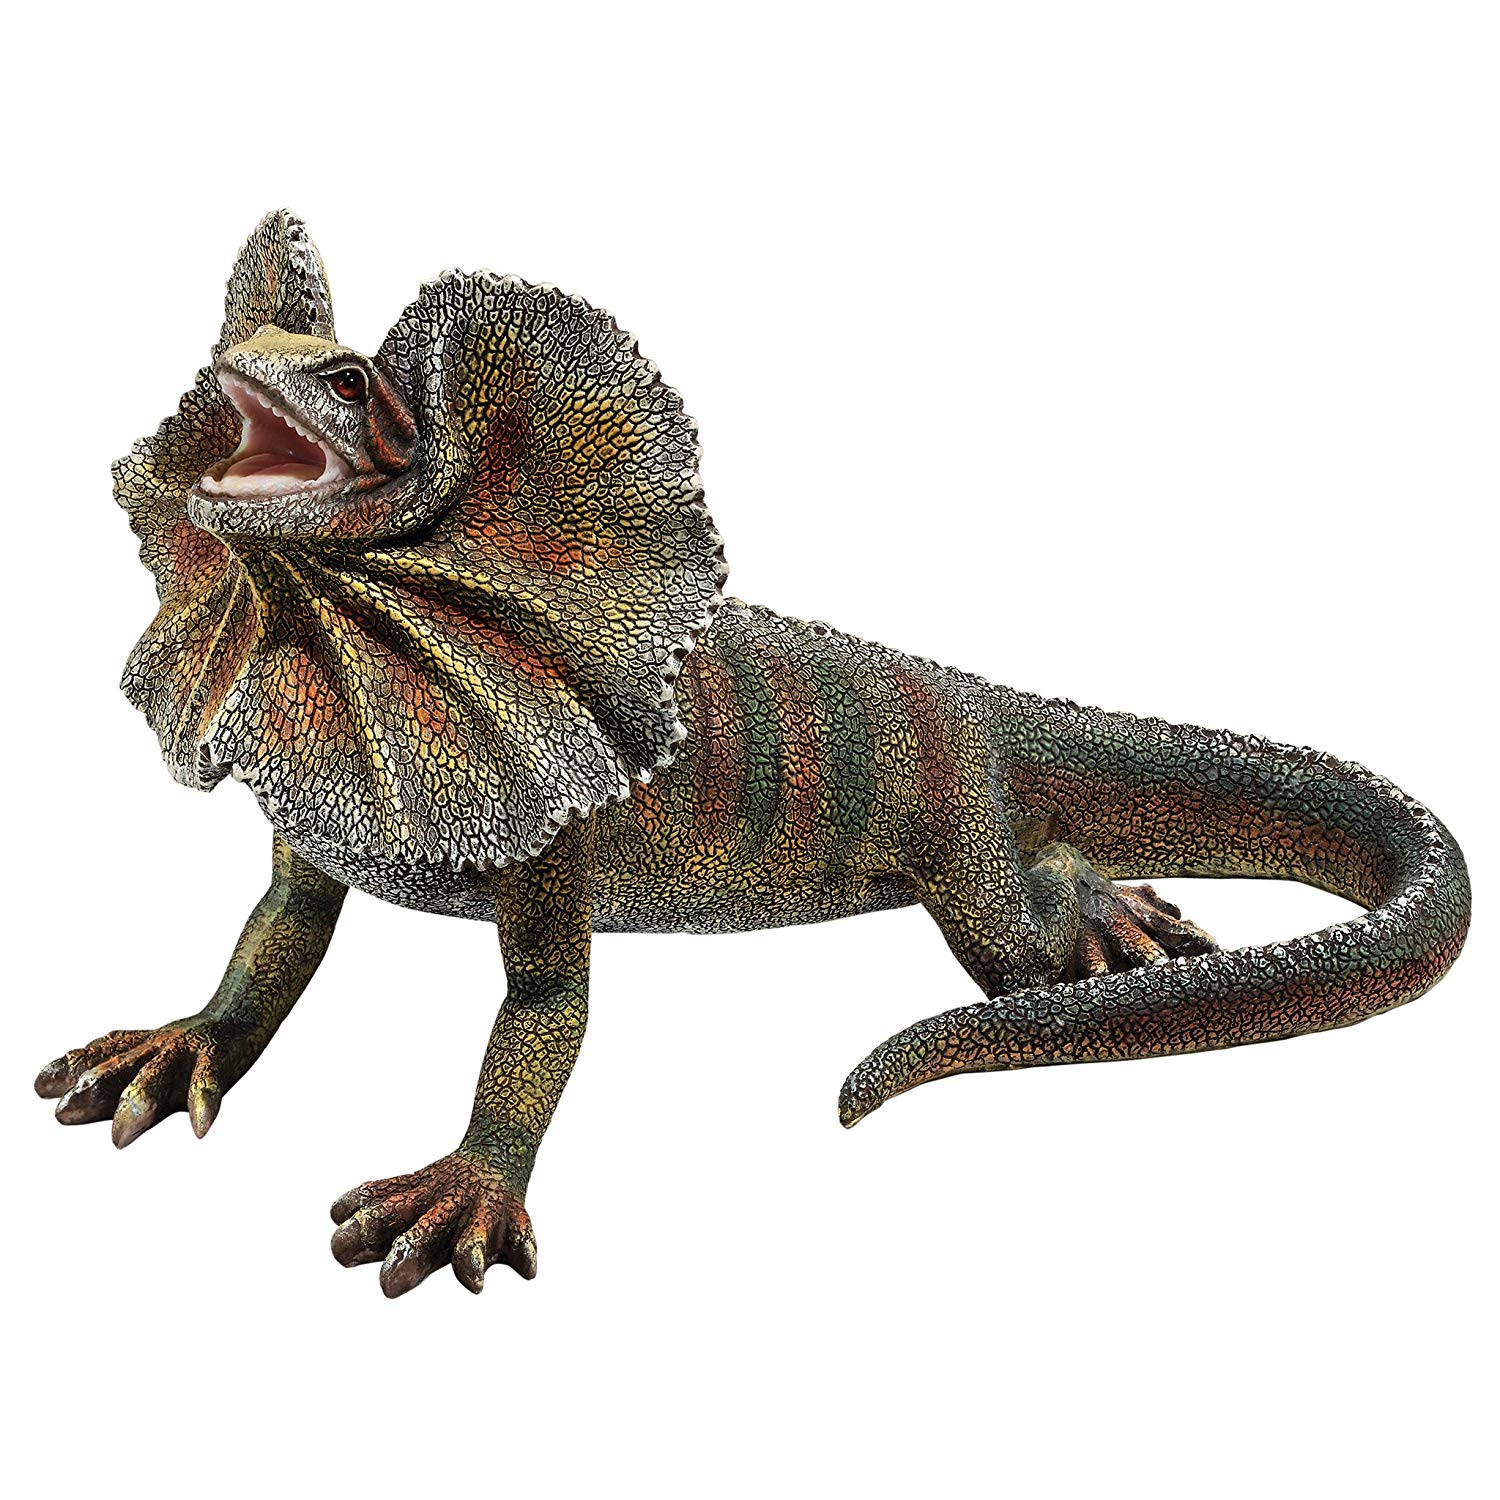 Amazon.com : Design Toscano Frill-Necked Lizard Statue : Garden ...